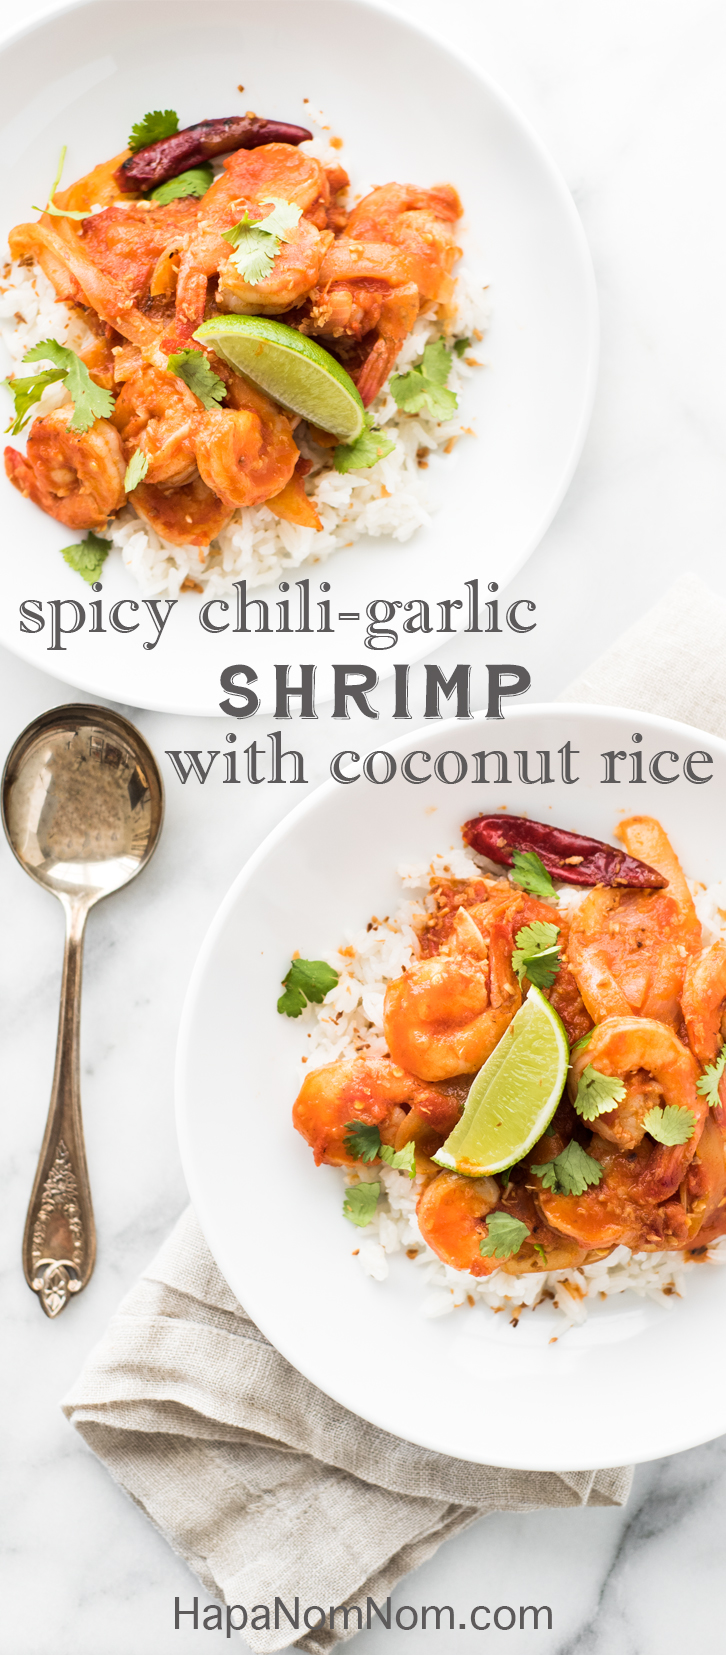 Spicy Chili Garlic Shrimp with Coconut Rice